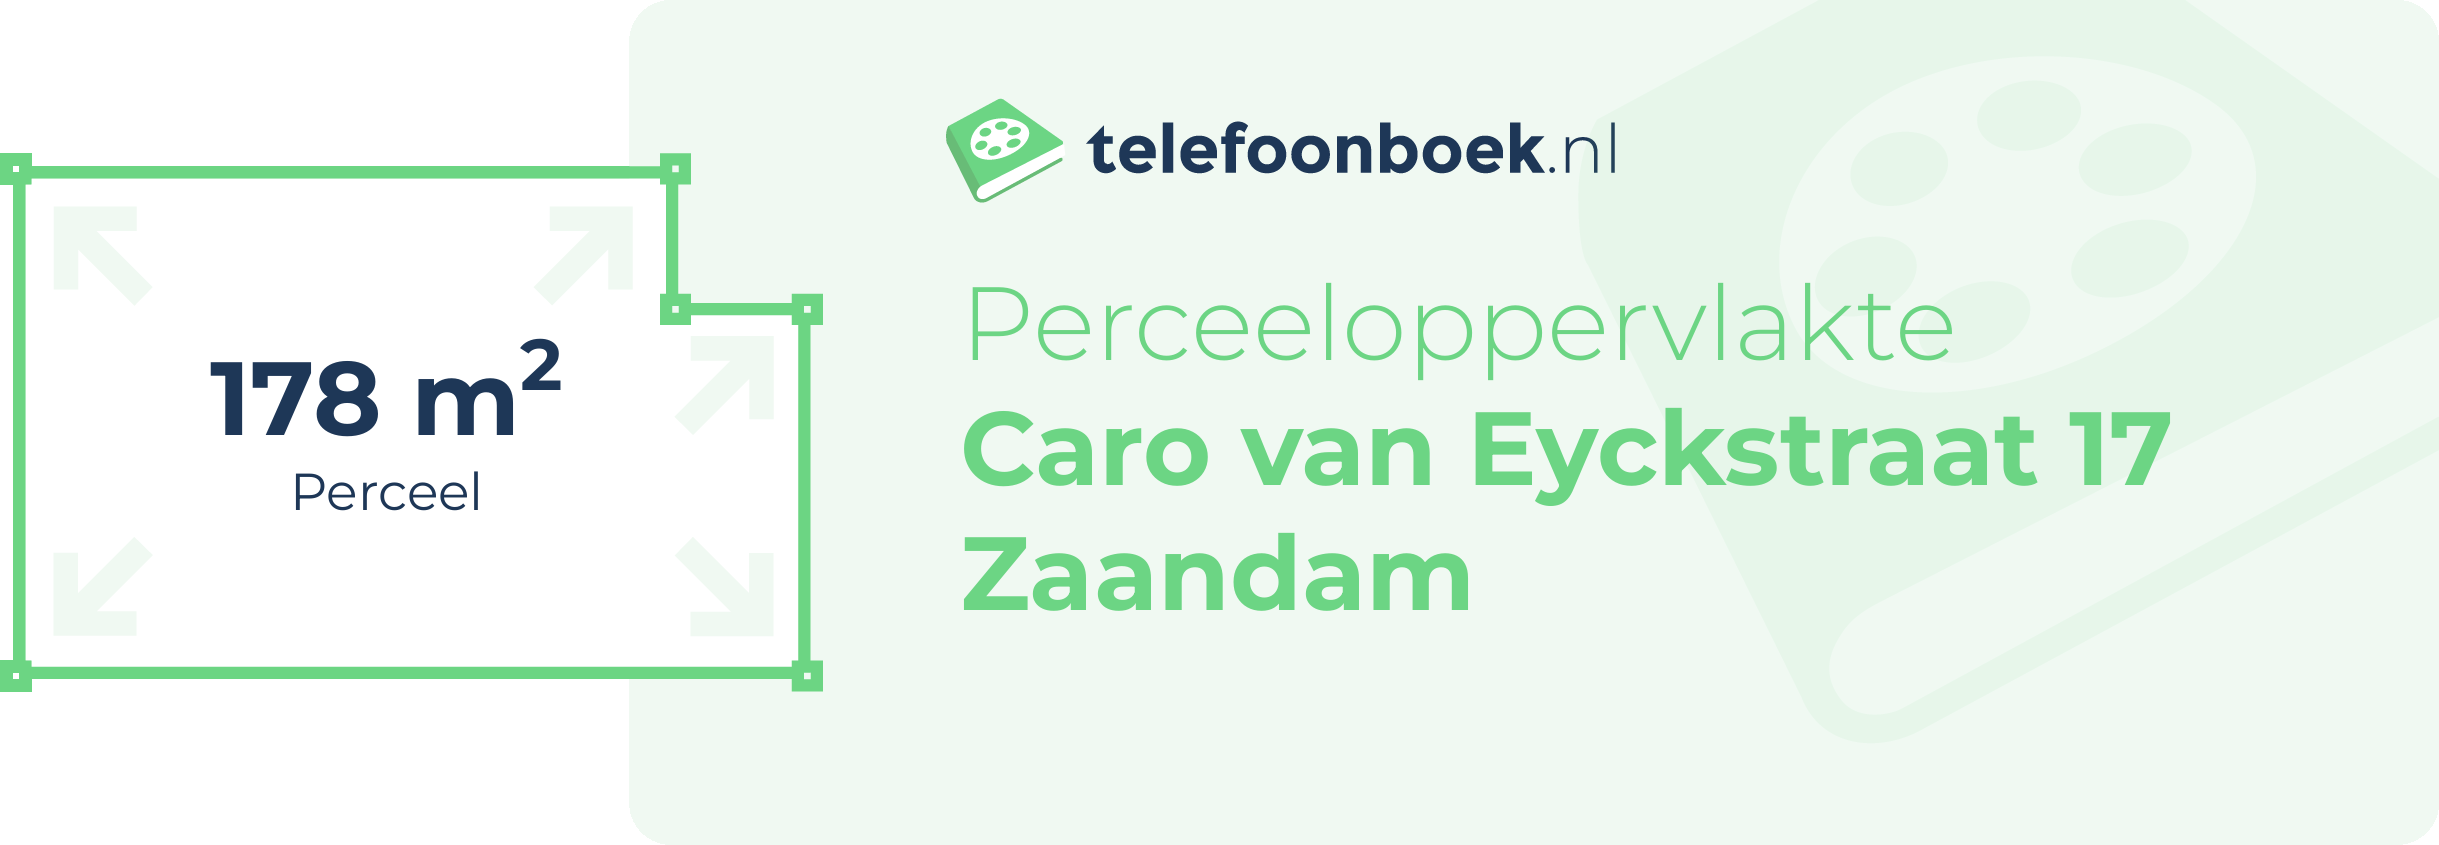 Perceeloppervlakte Caro Van Eyckstraat 17 Zaandam